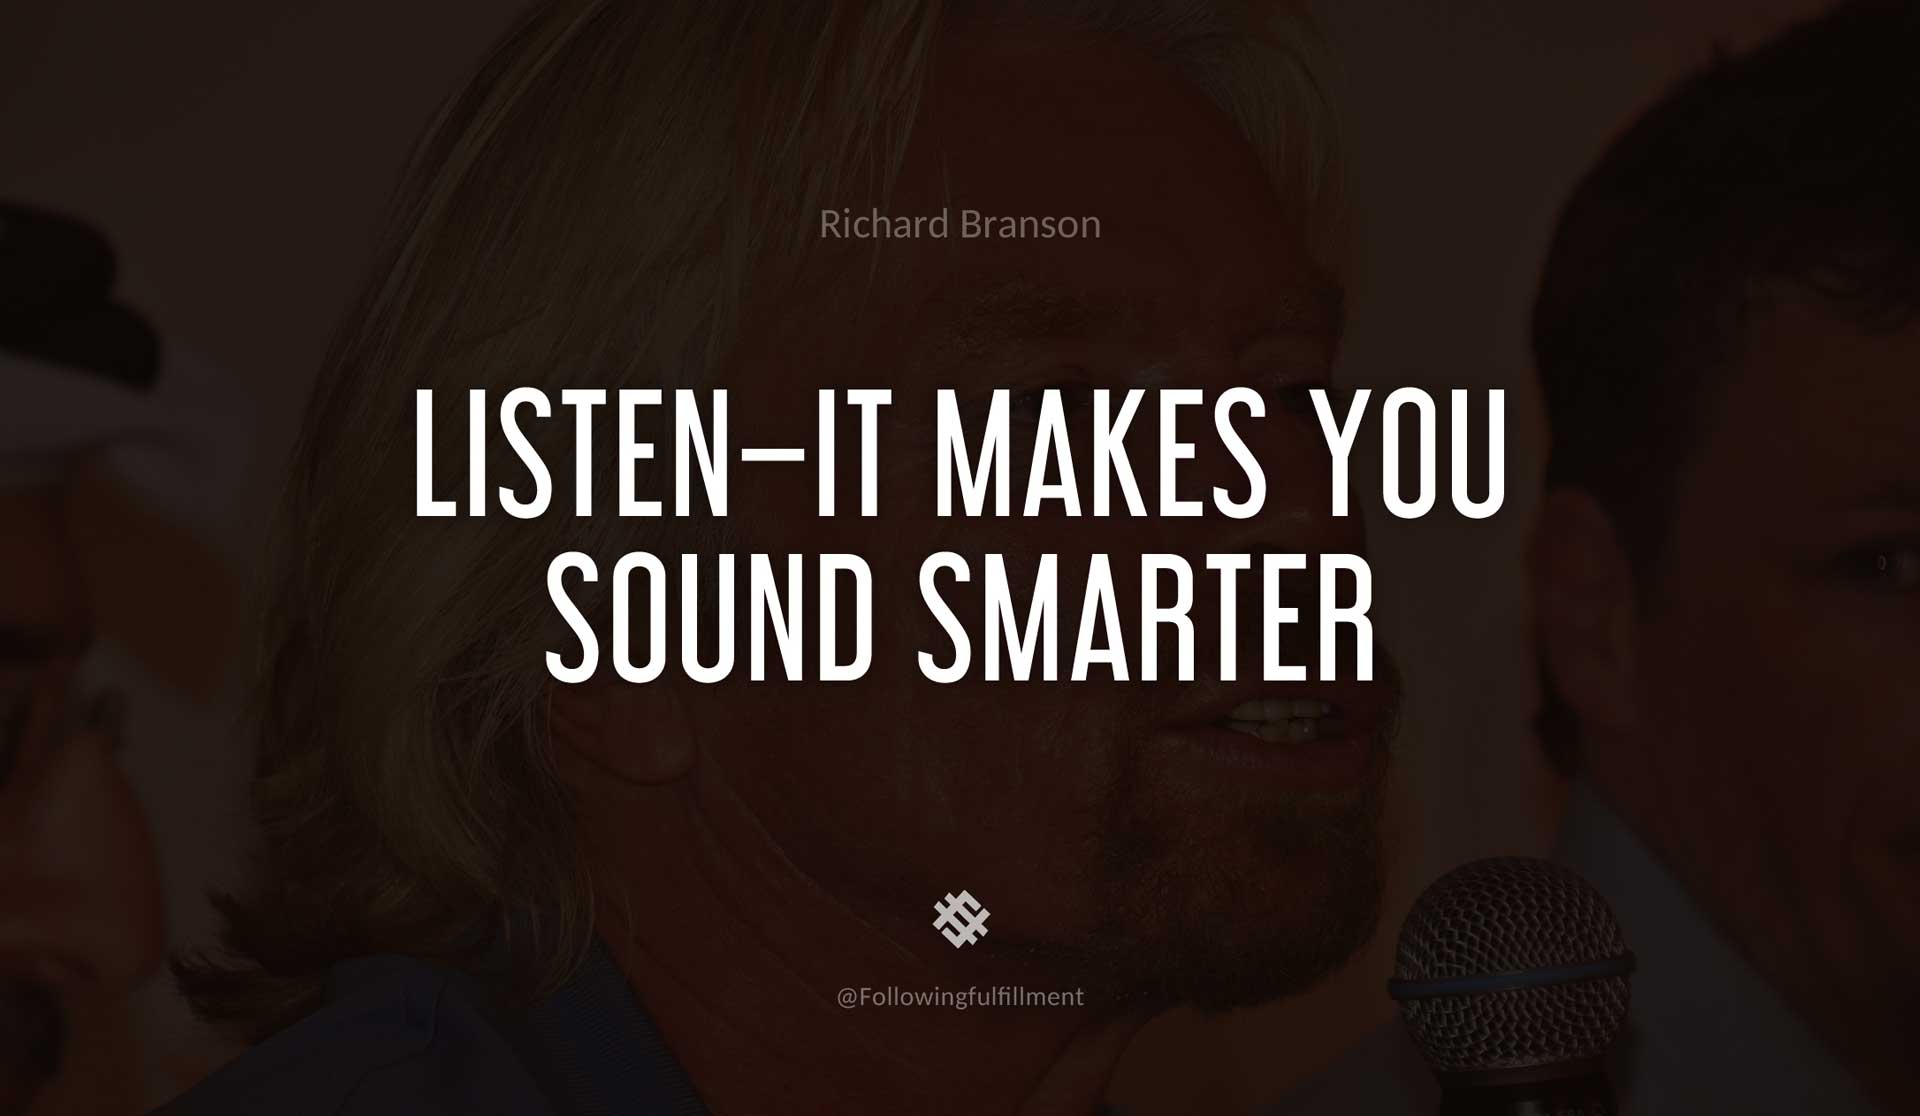 Listen-it-makes-you-sound-smarter--RICHARD-BRANSON-Quote.jpg